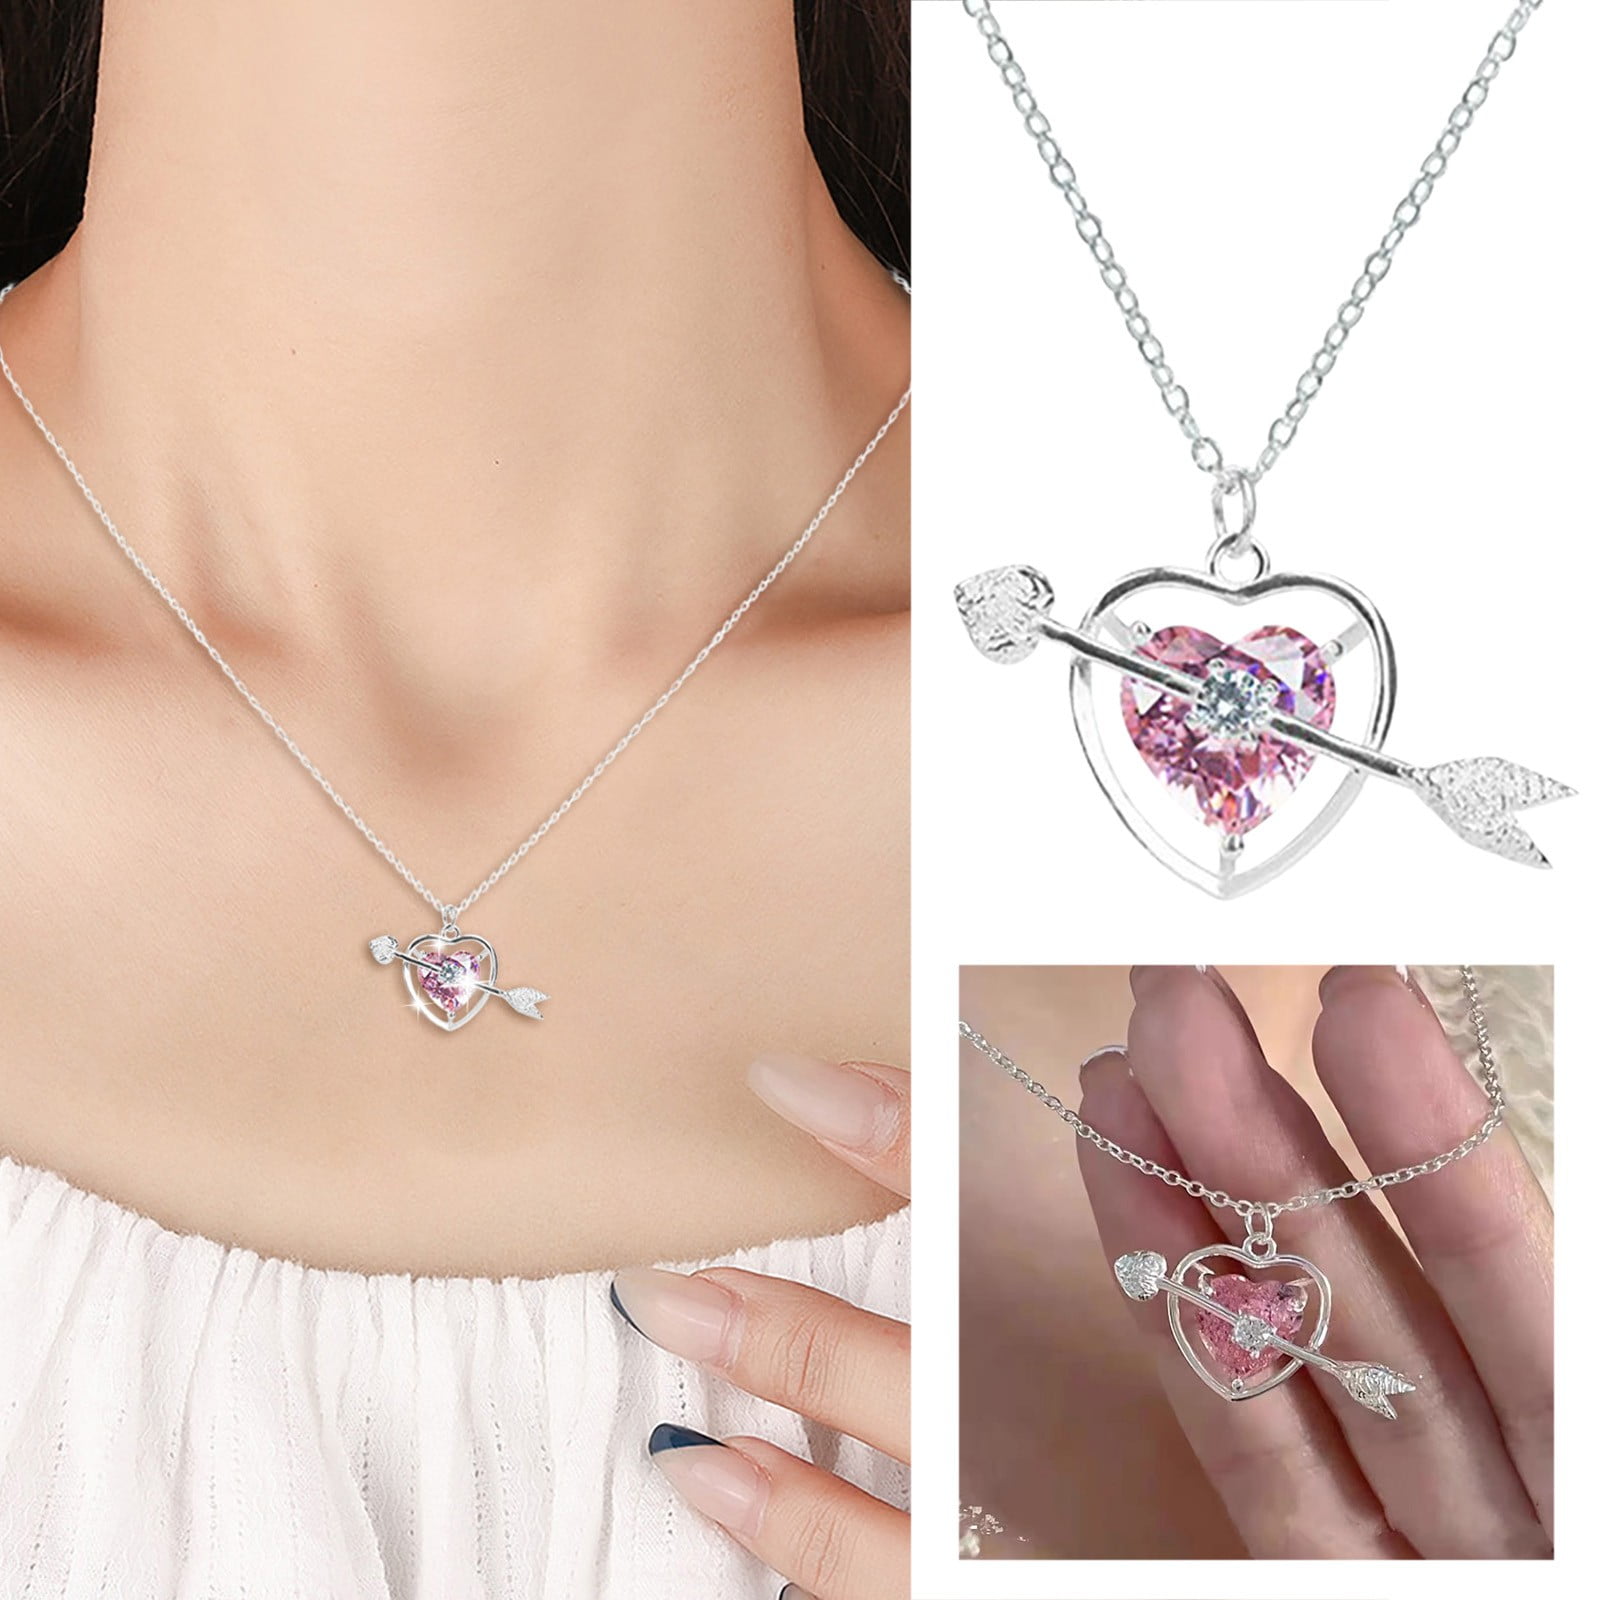 mnjin pink diamond necklace love collarbone chain light girlfriend